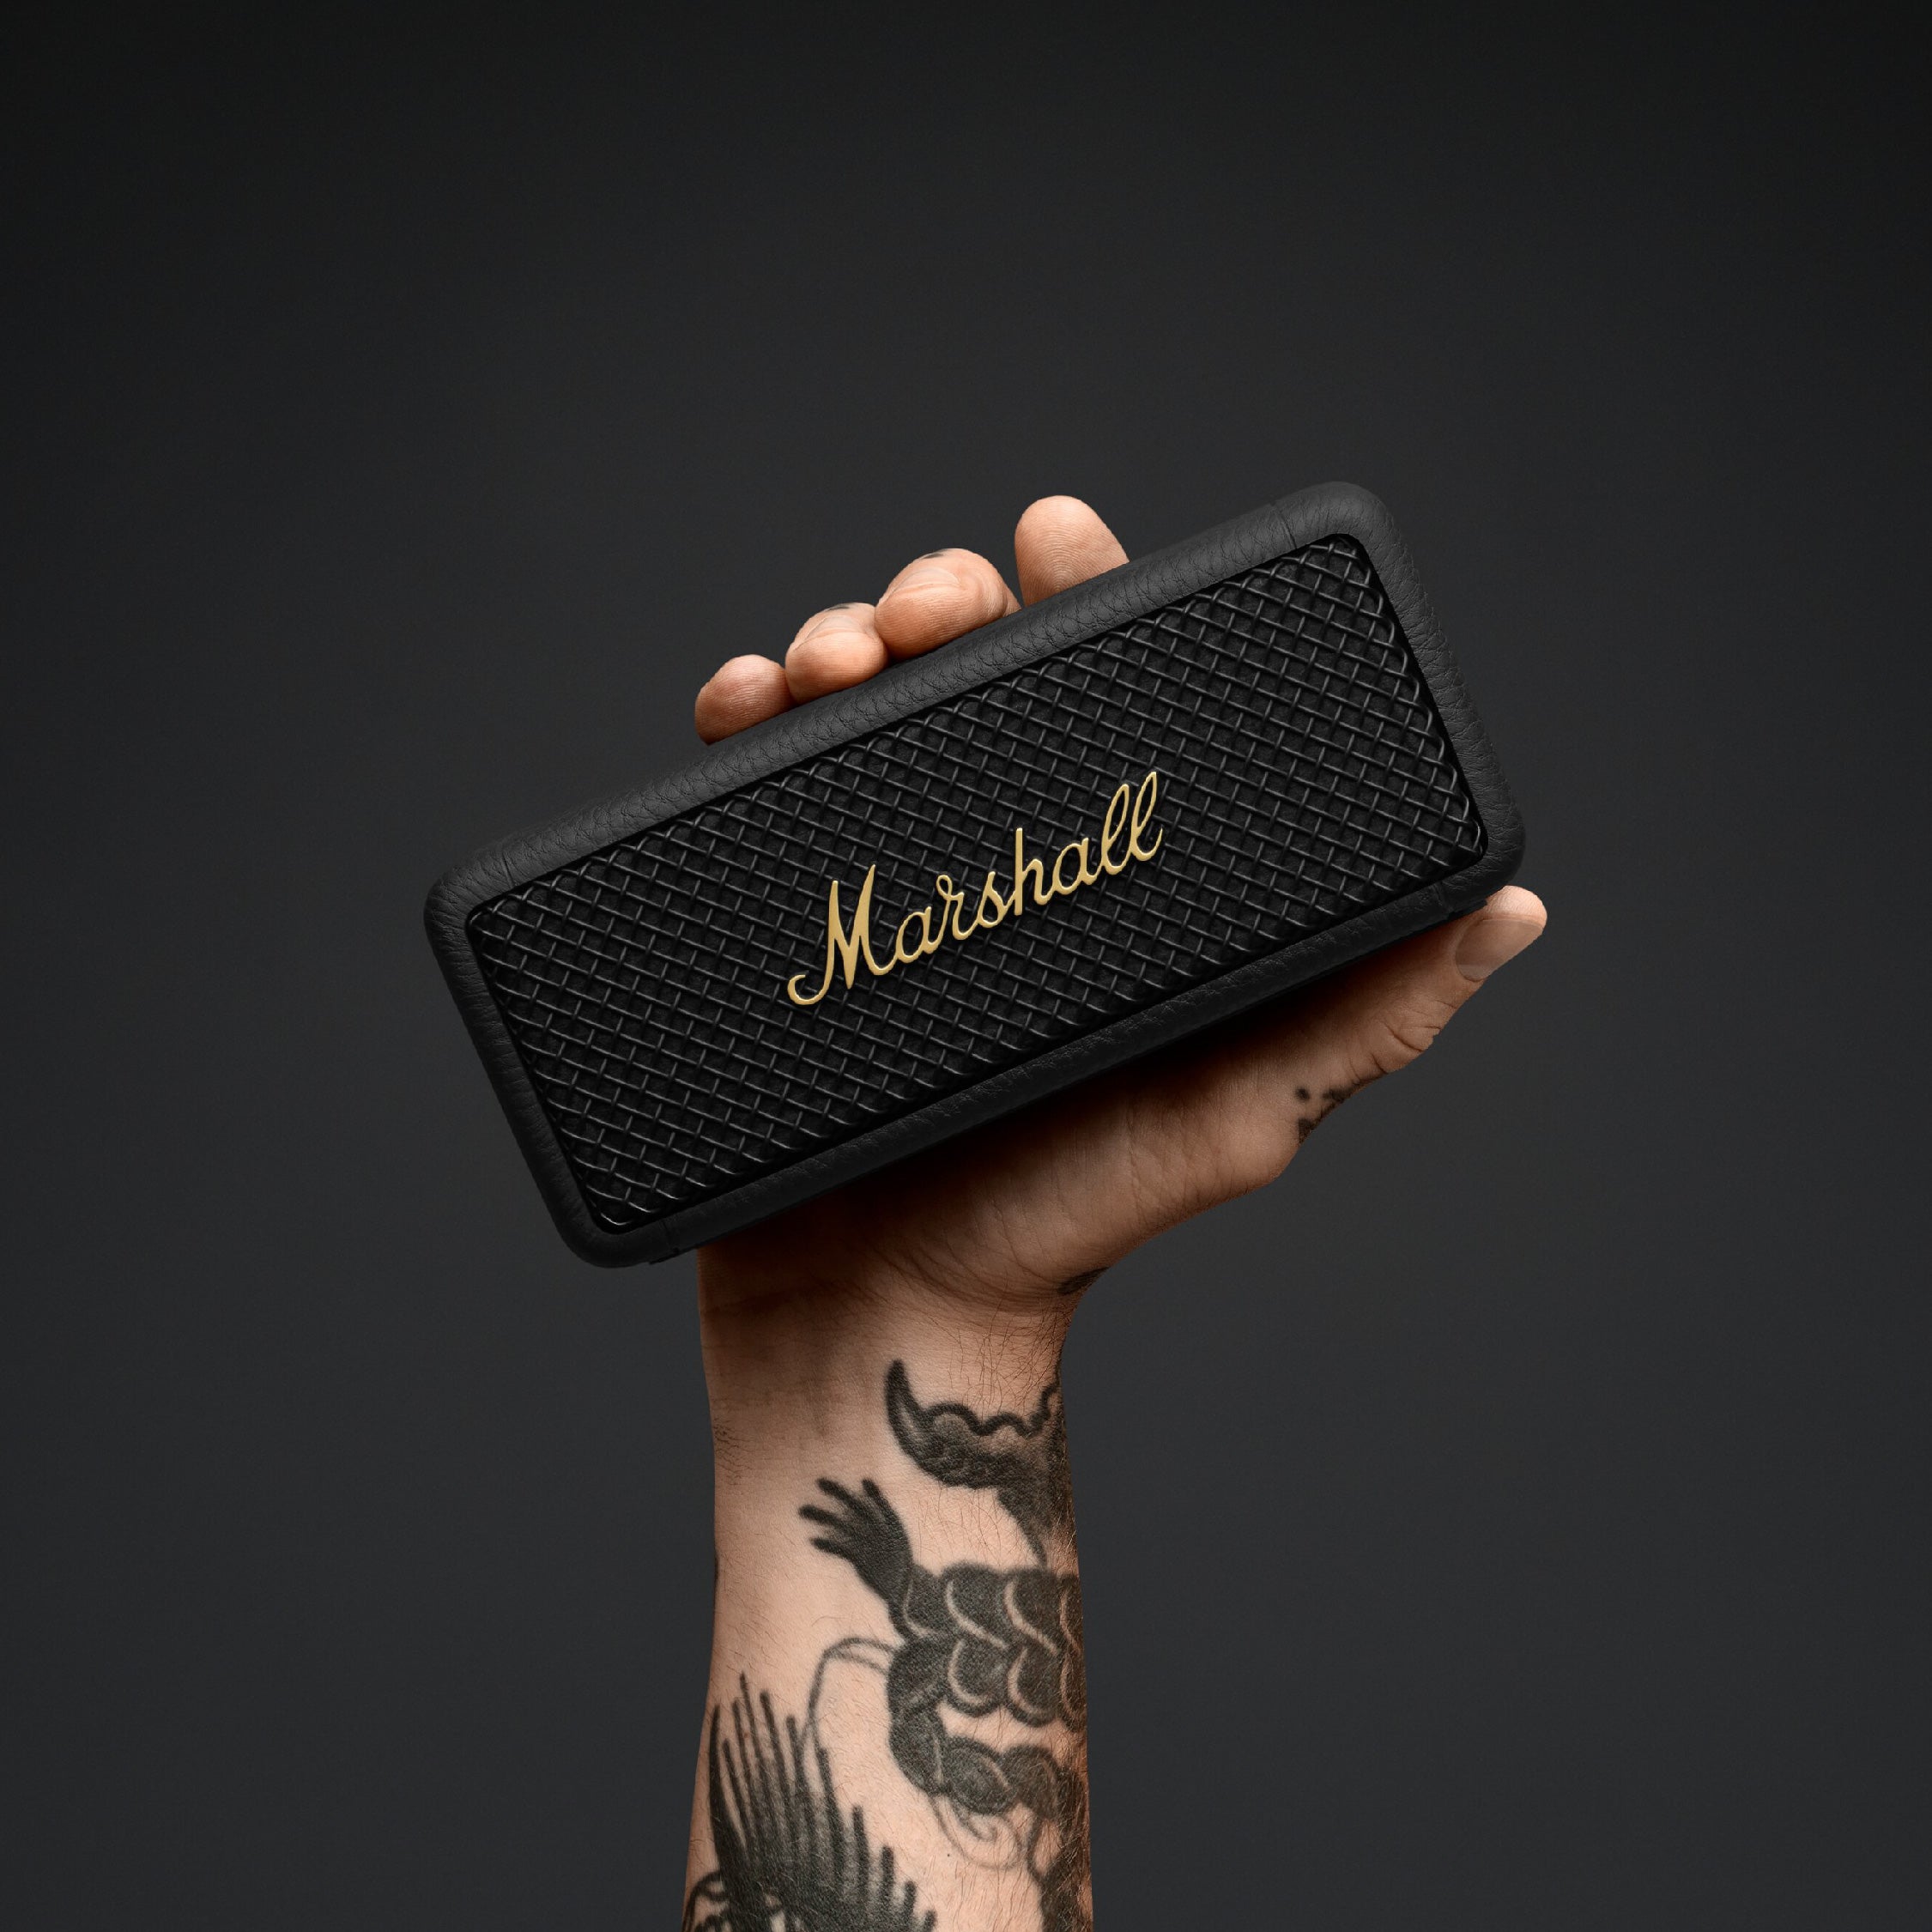 Marshall Emberton II Portable Waterproof Wireless Speaker (Black & Brass)